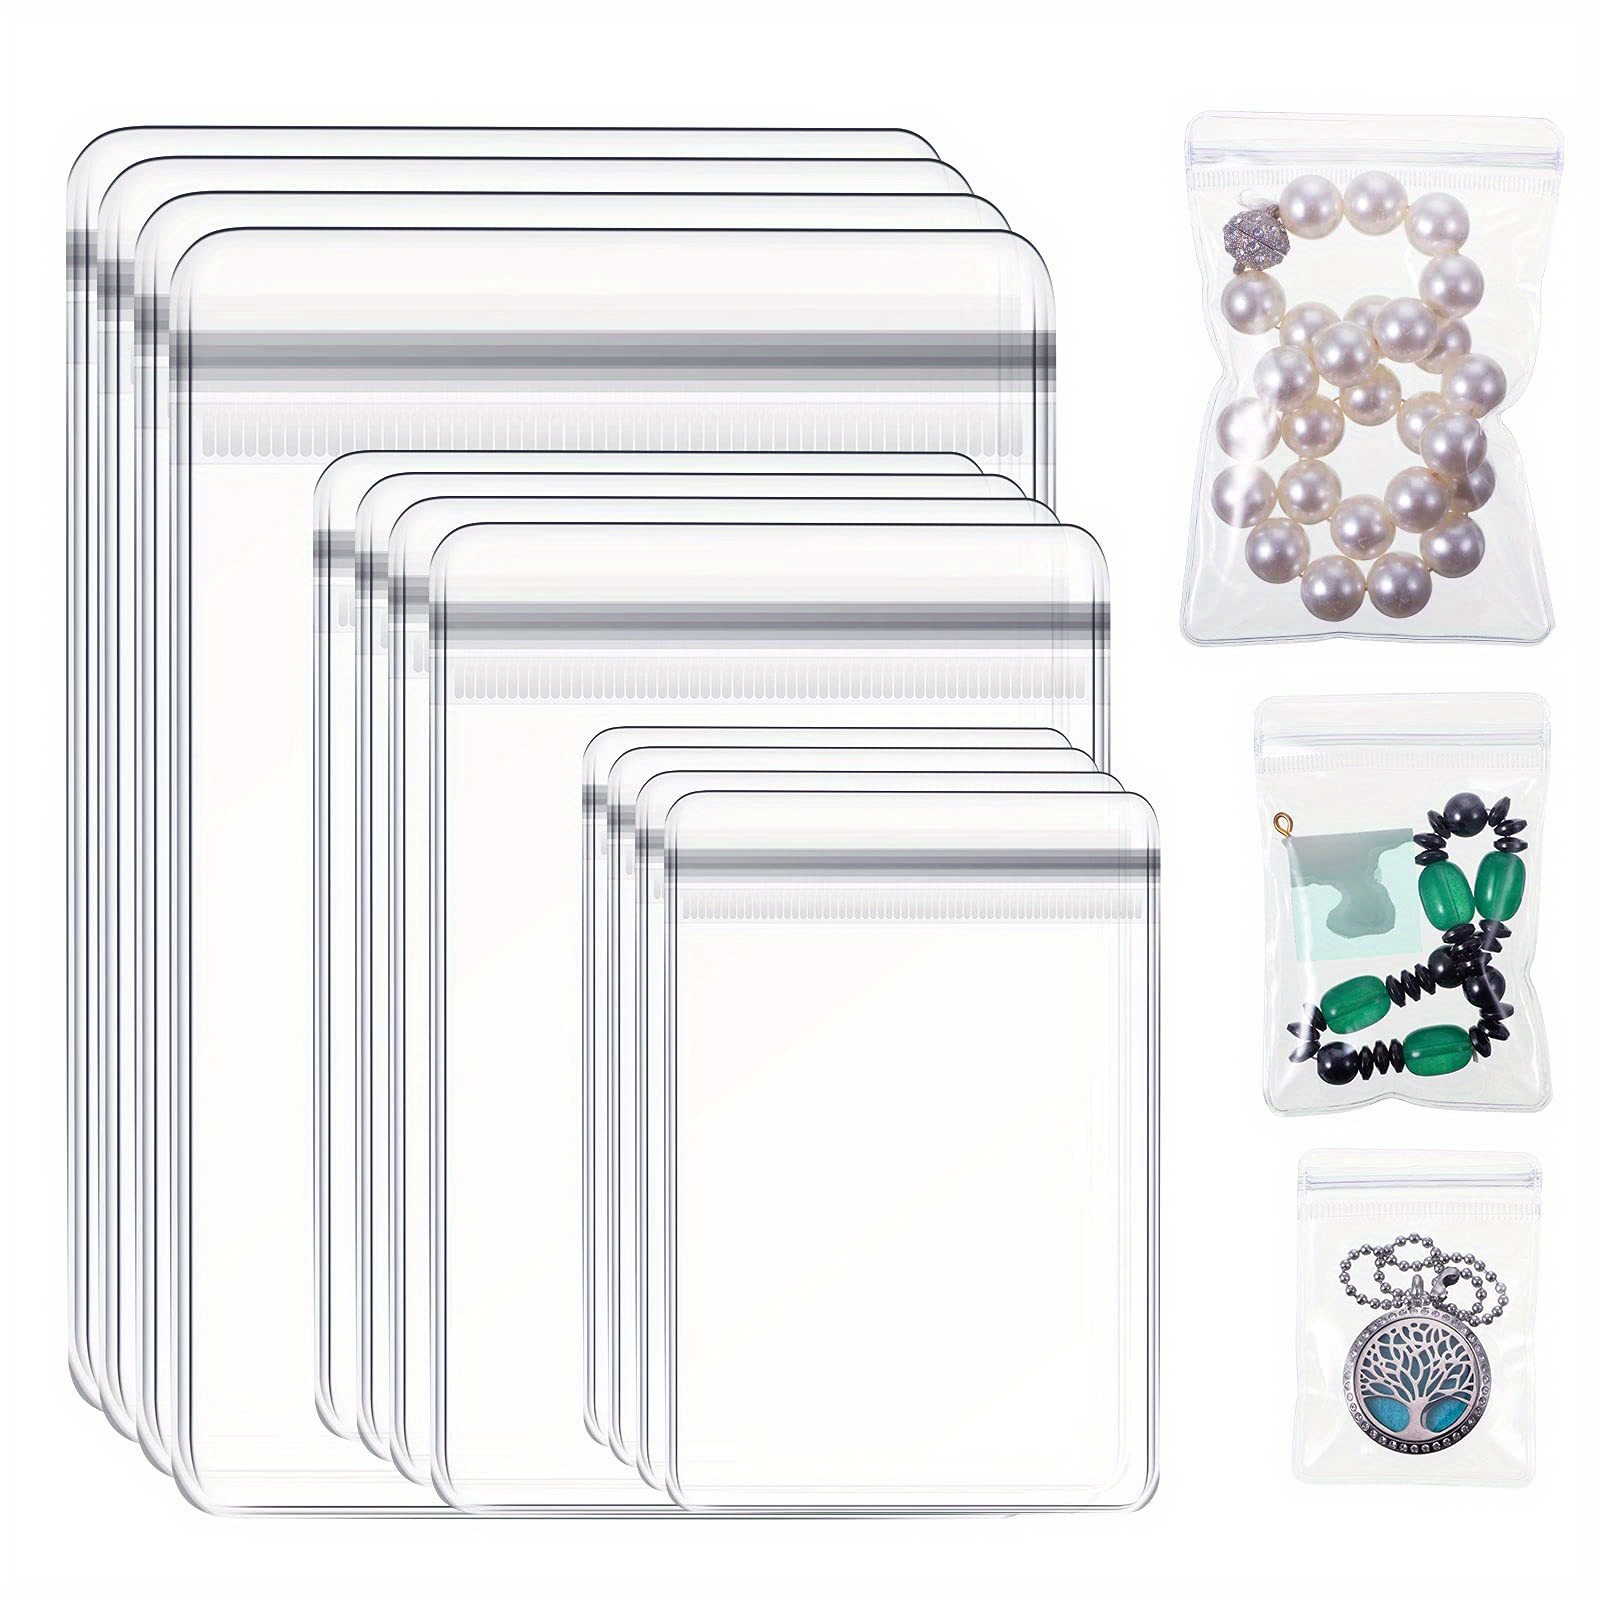  WEDDINGHELPER Jewelry Bags Small Self-Sealing Plastic